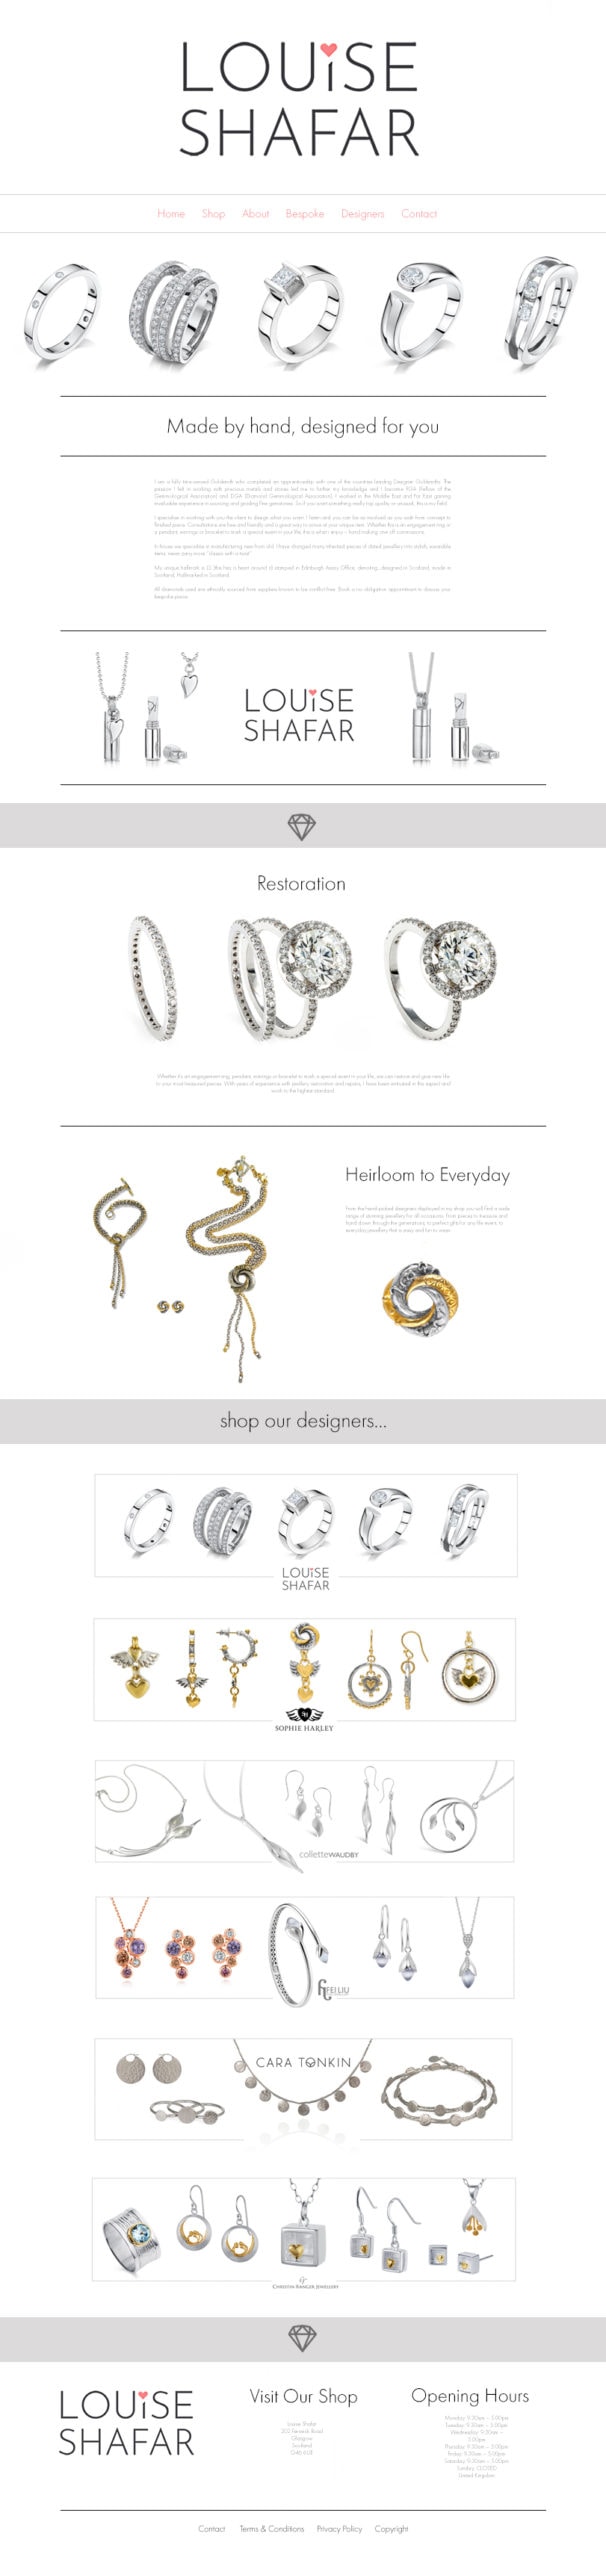 Louise Shafar Jewellery Website designed by Jade Starmore